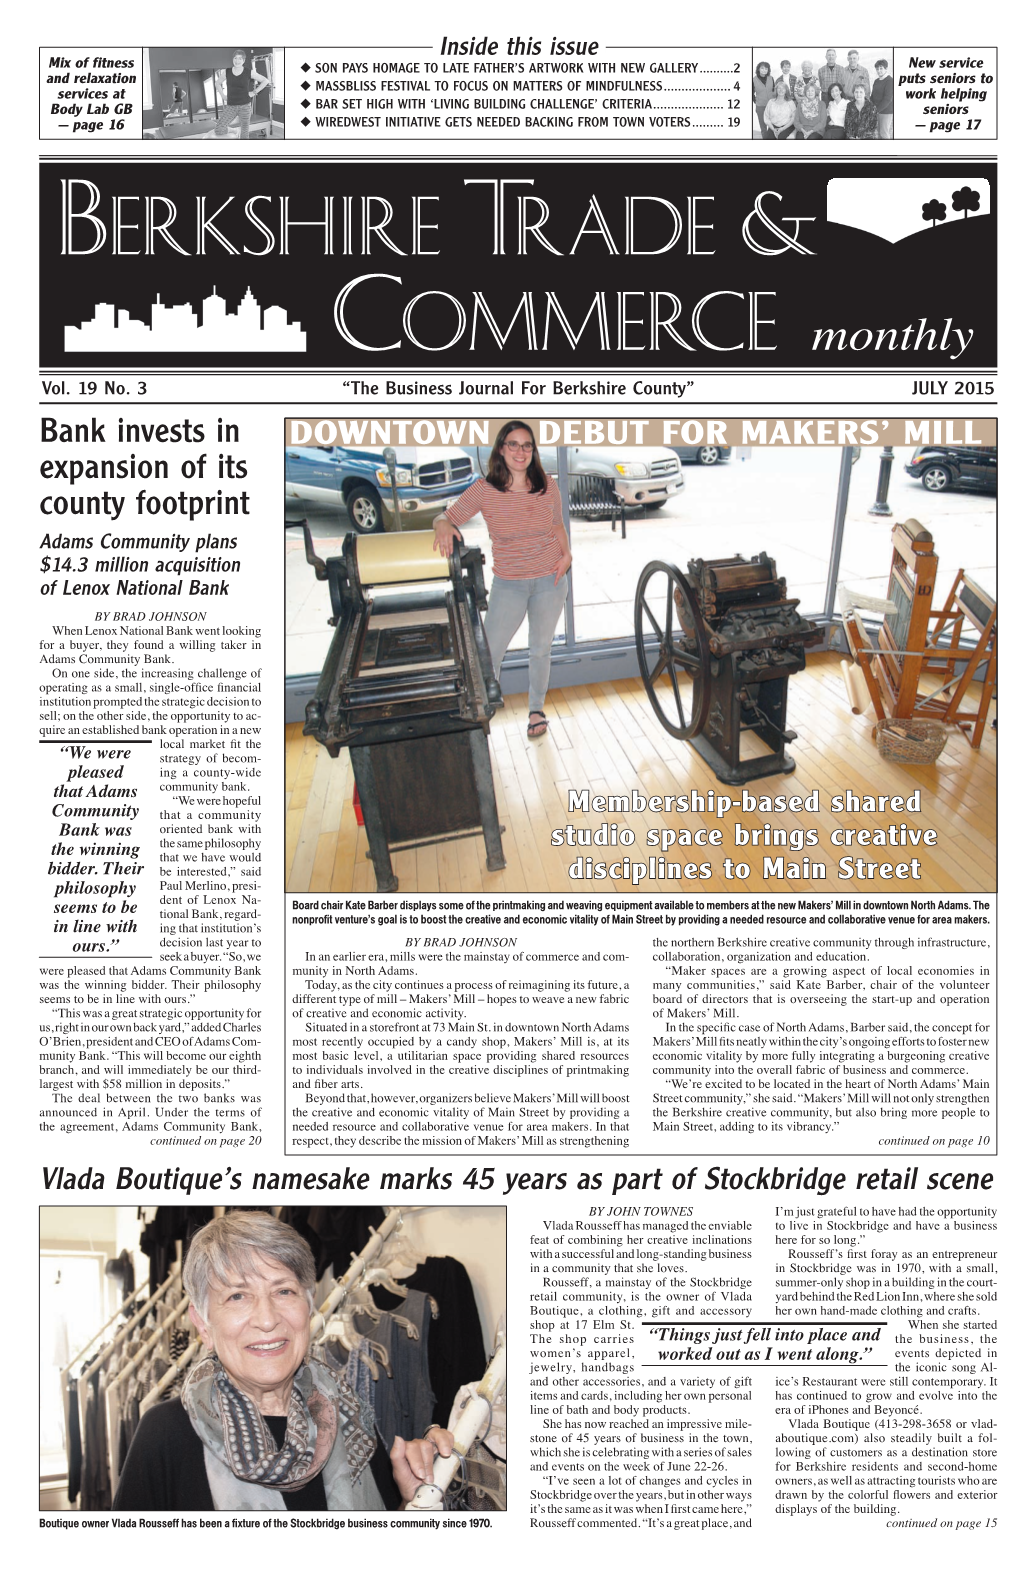 Berkshire Trade & Commerce Monthly